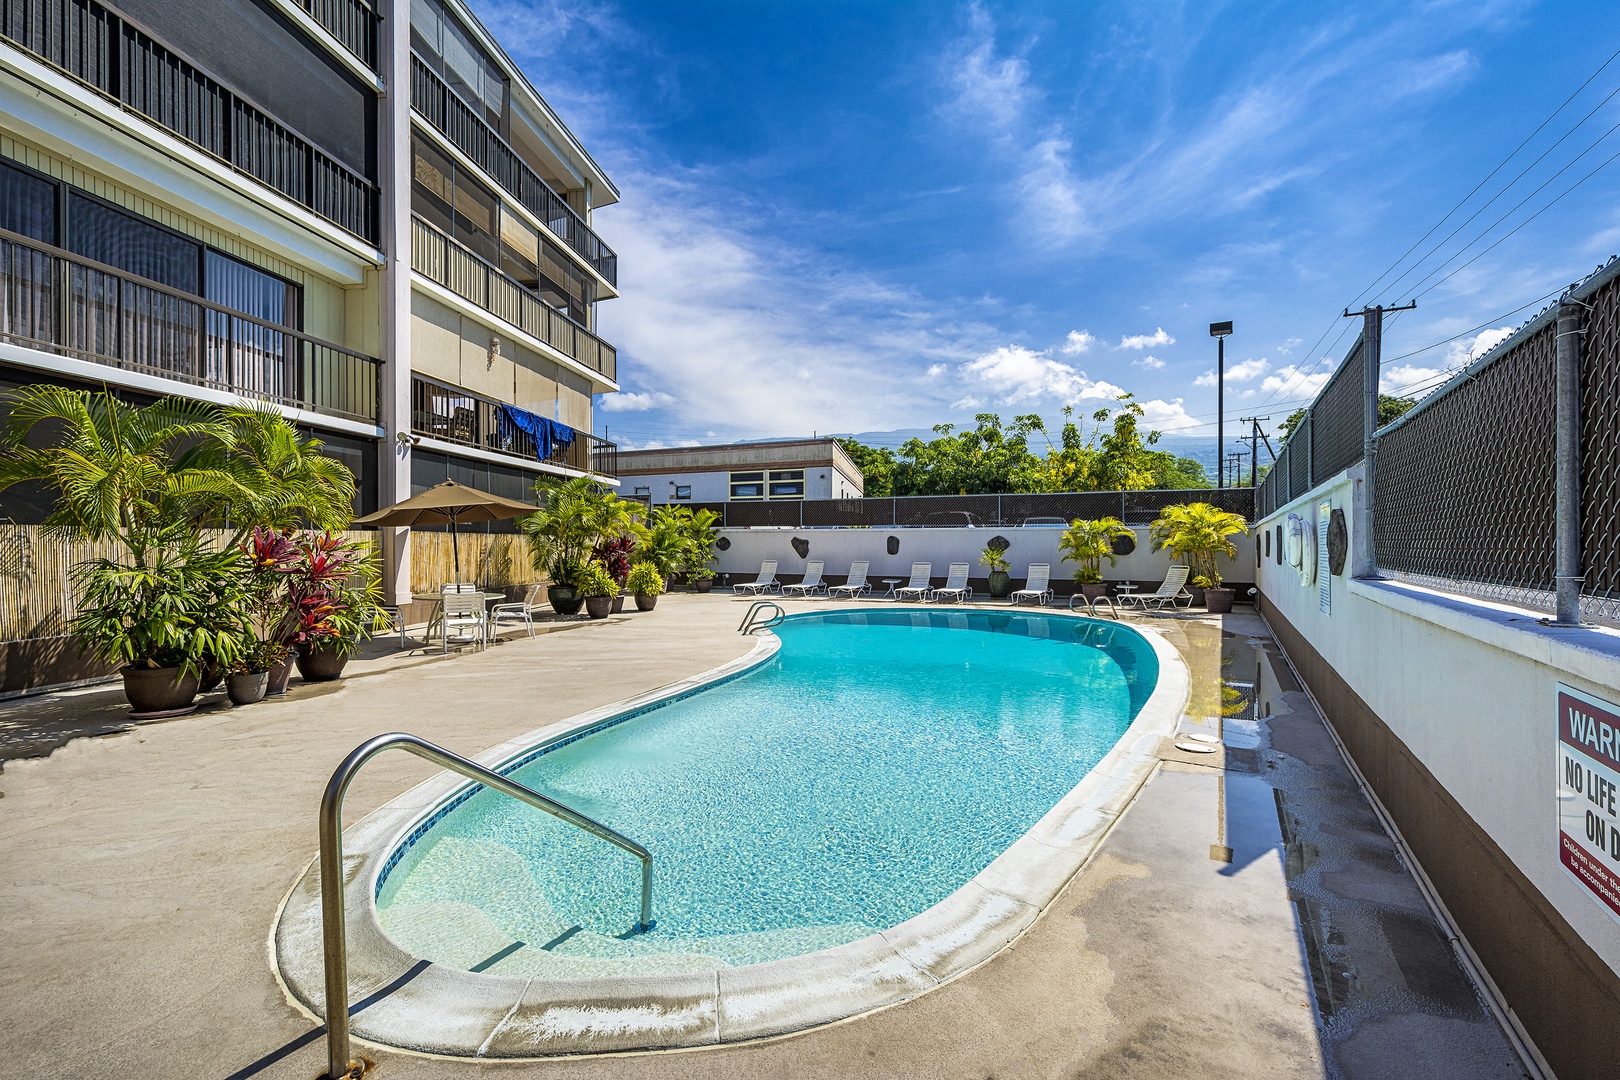 Kailua Kona Vacation Rentals, Kona Plaza 201 - Complex pool for all to enjoy!